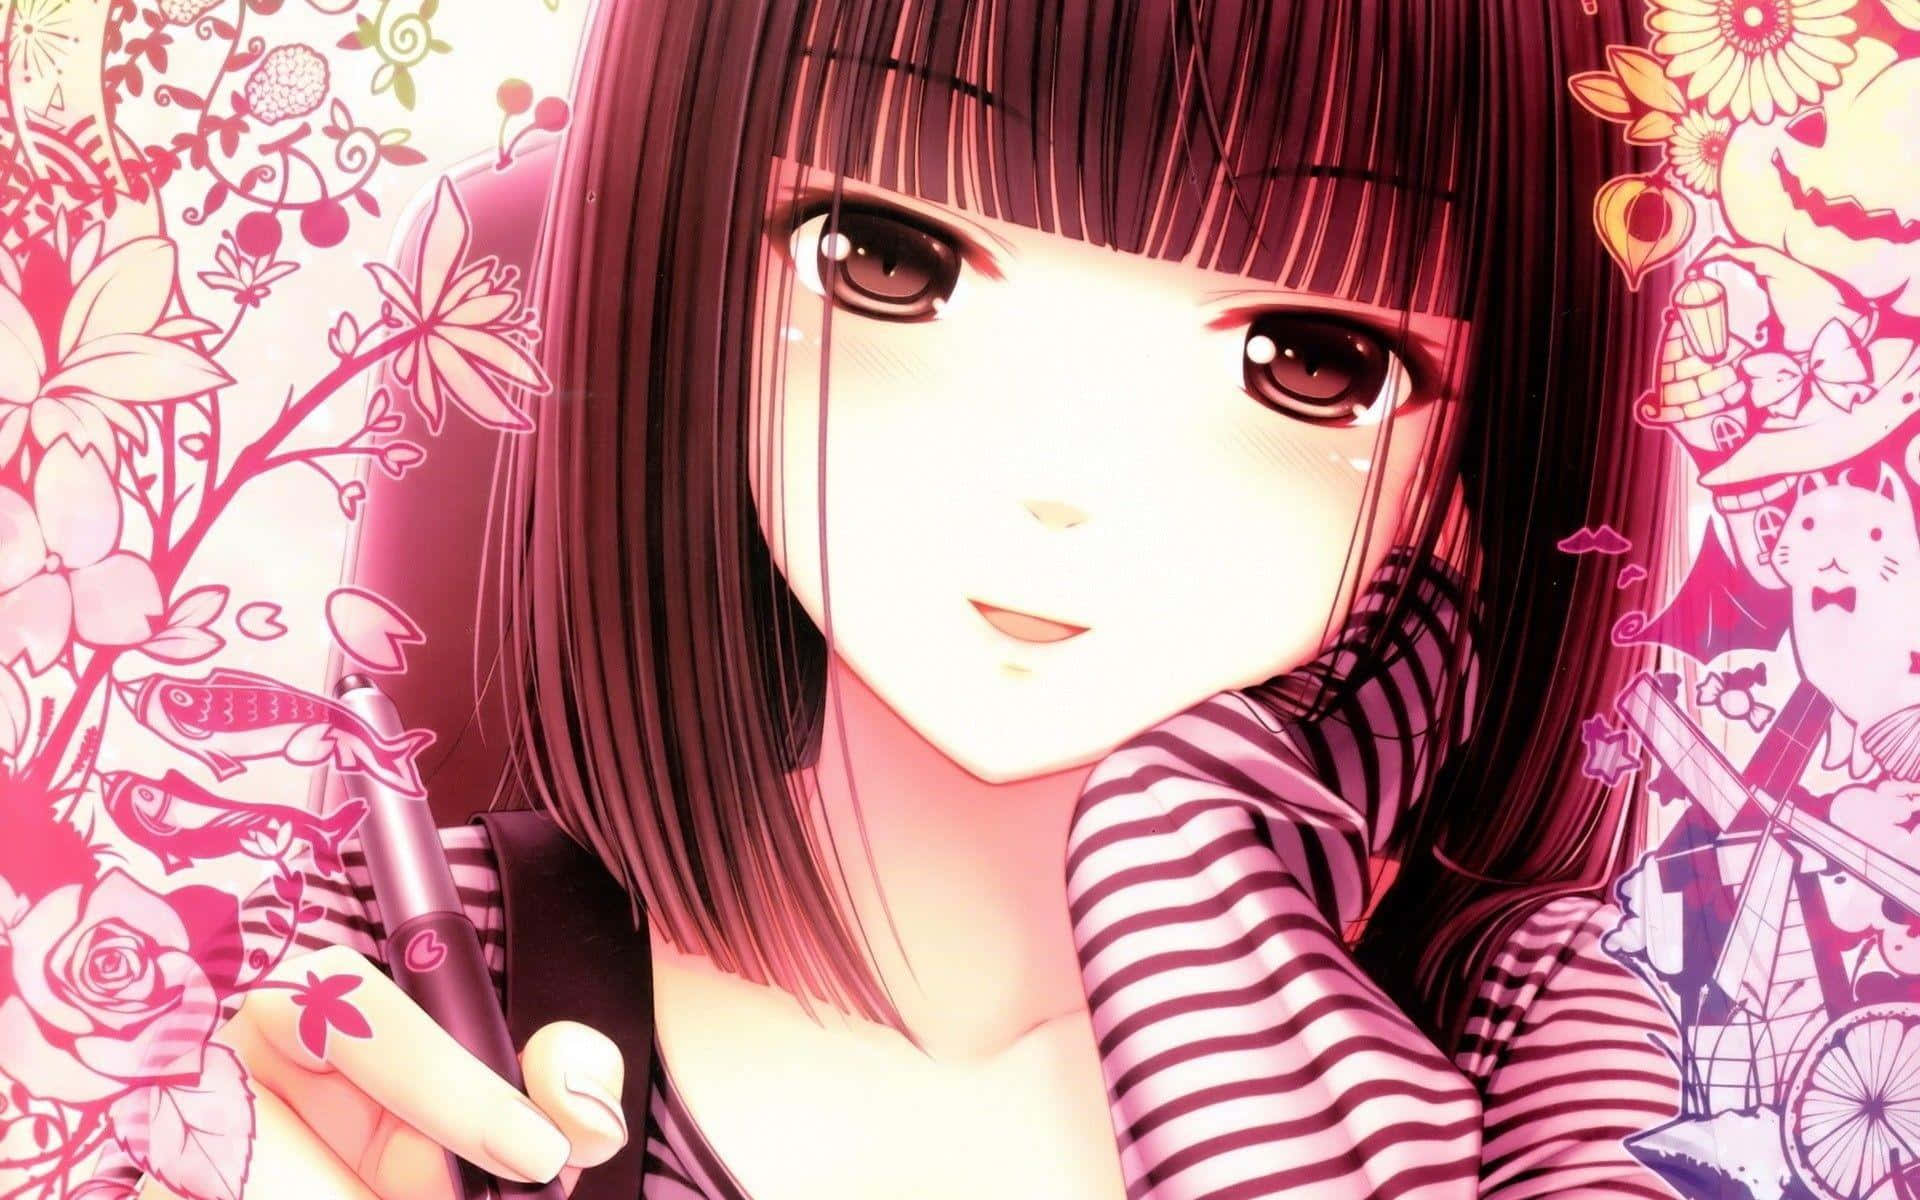 A Sweet, Kawaii Anime Girl With A Cute Smile. Background